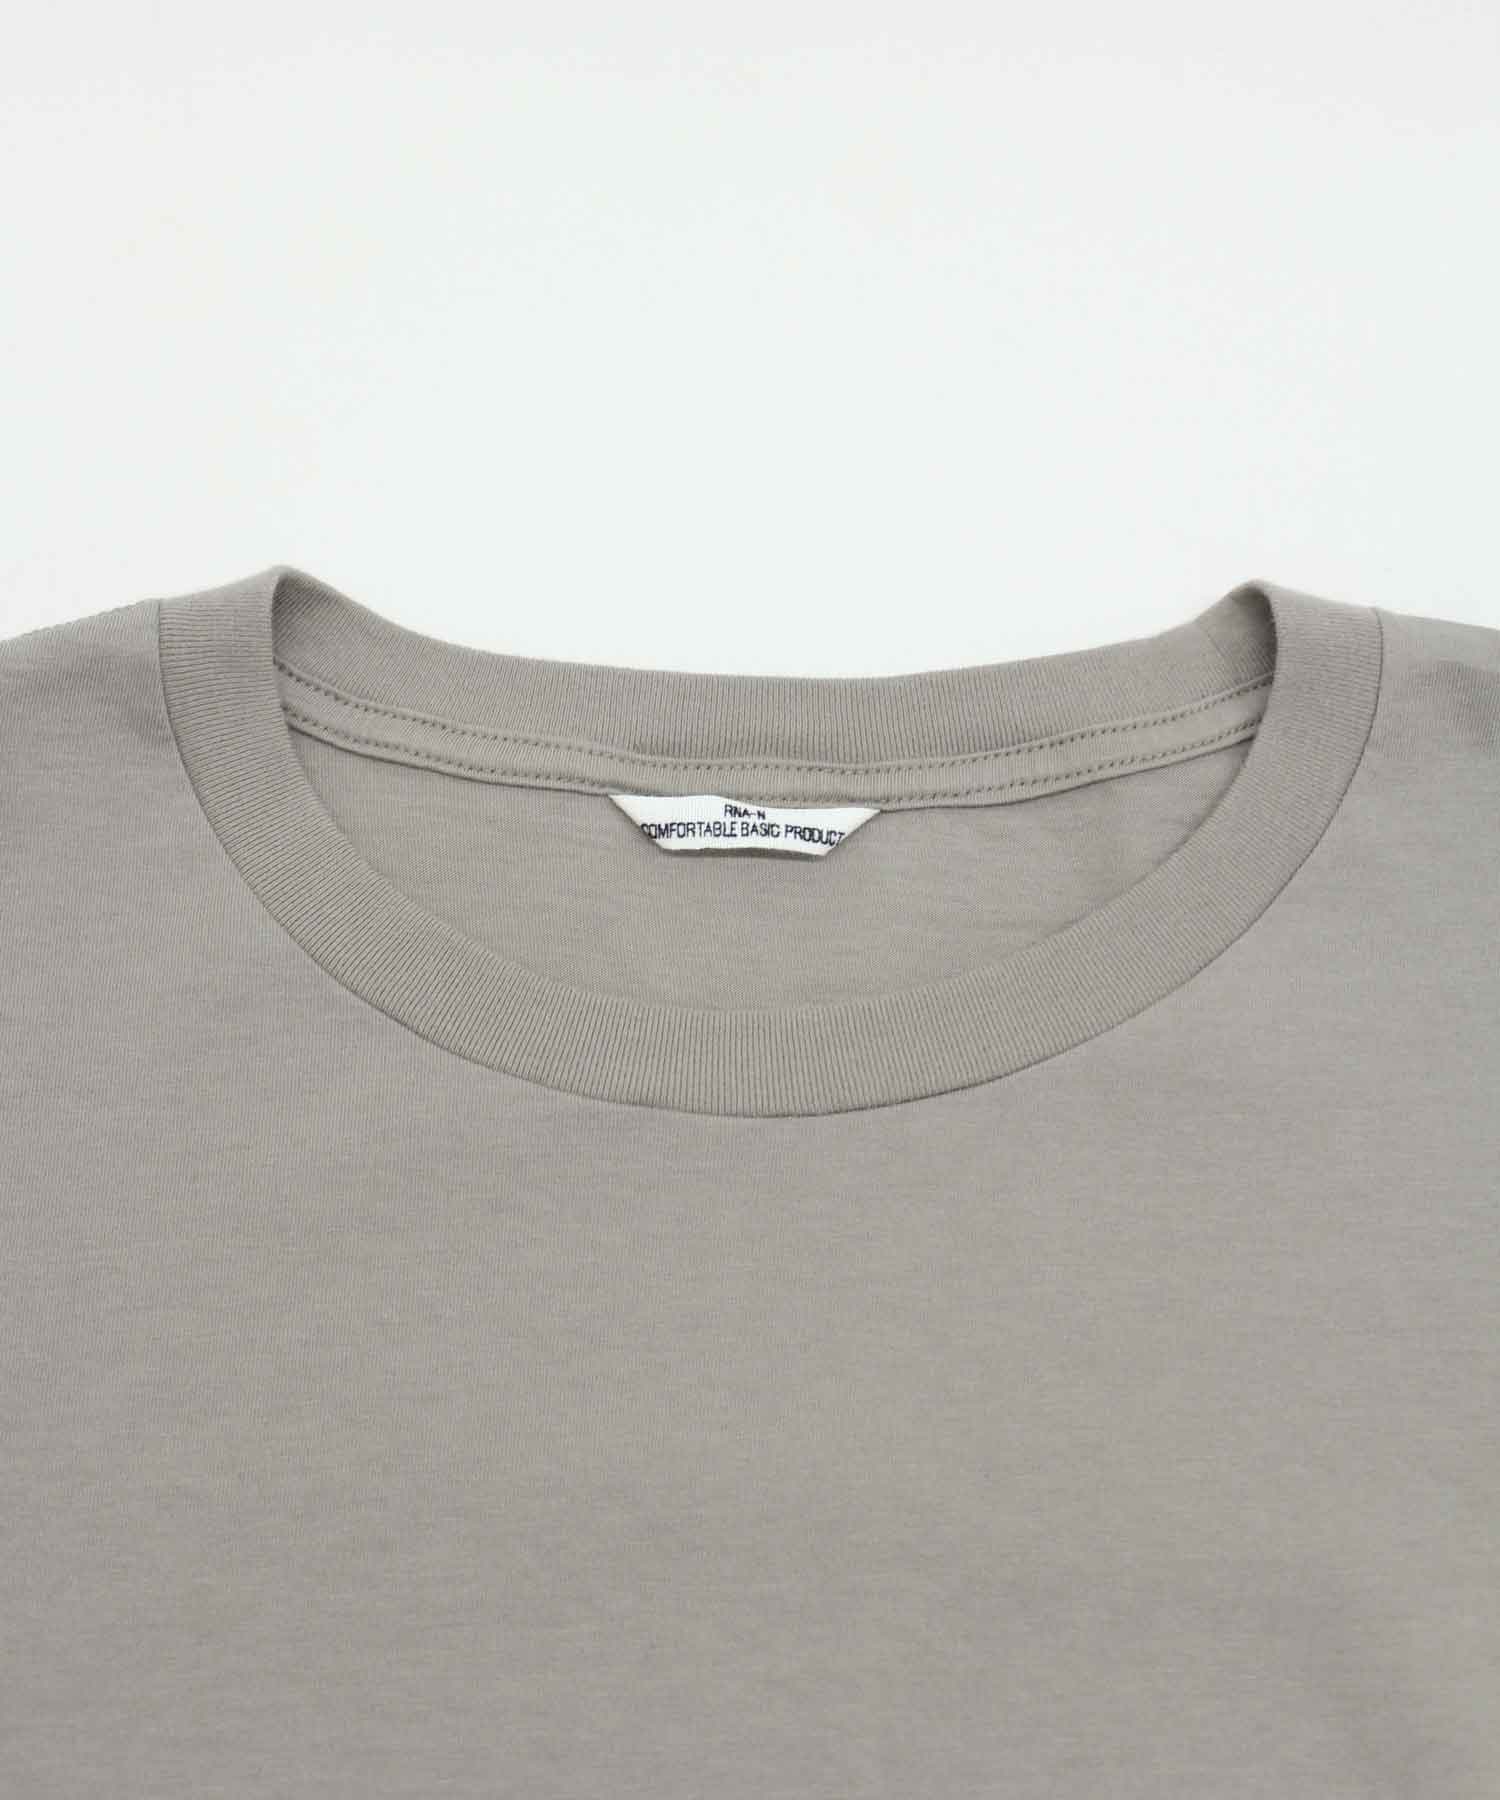 Tシャツ/カットソー(半袖/袖なし)新品 M 22ssマルジェラ オーガニックコットン Tシャツ グレー 4821